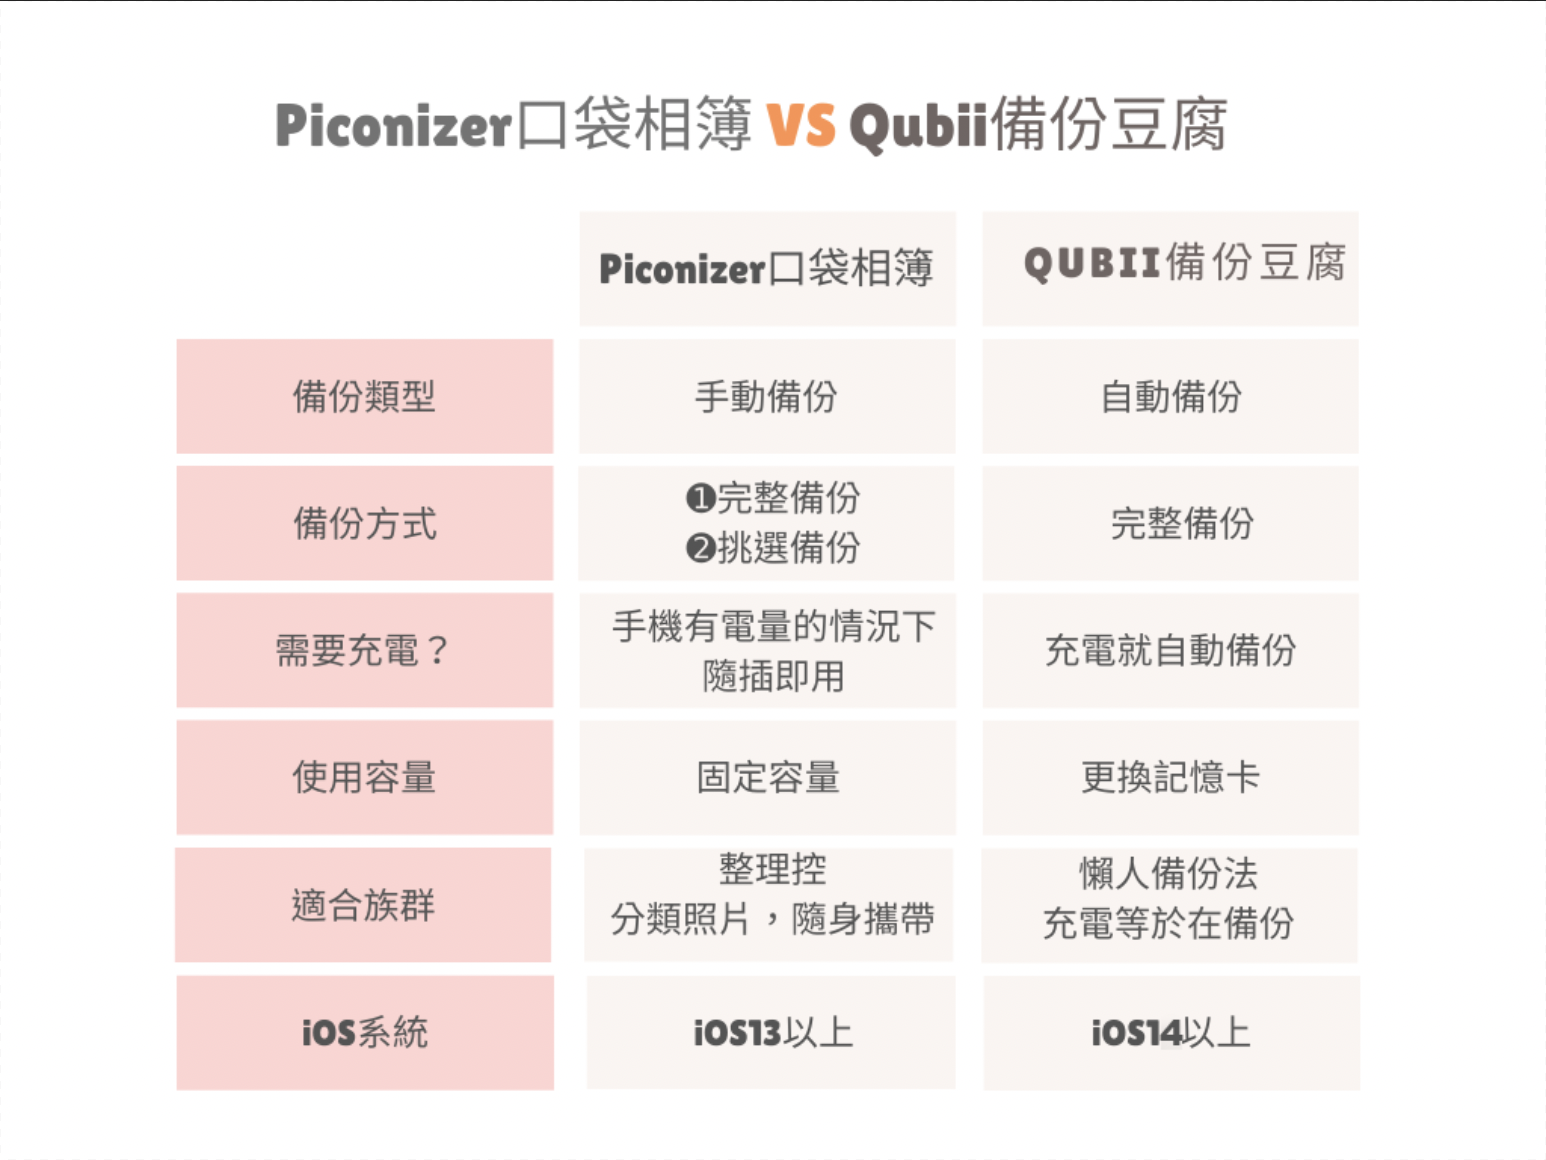 Piconizer vs Qubii更新.png